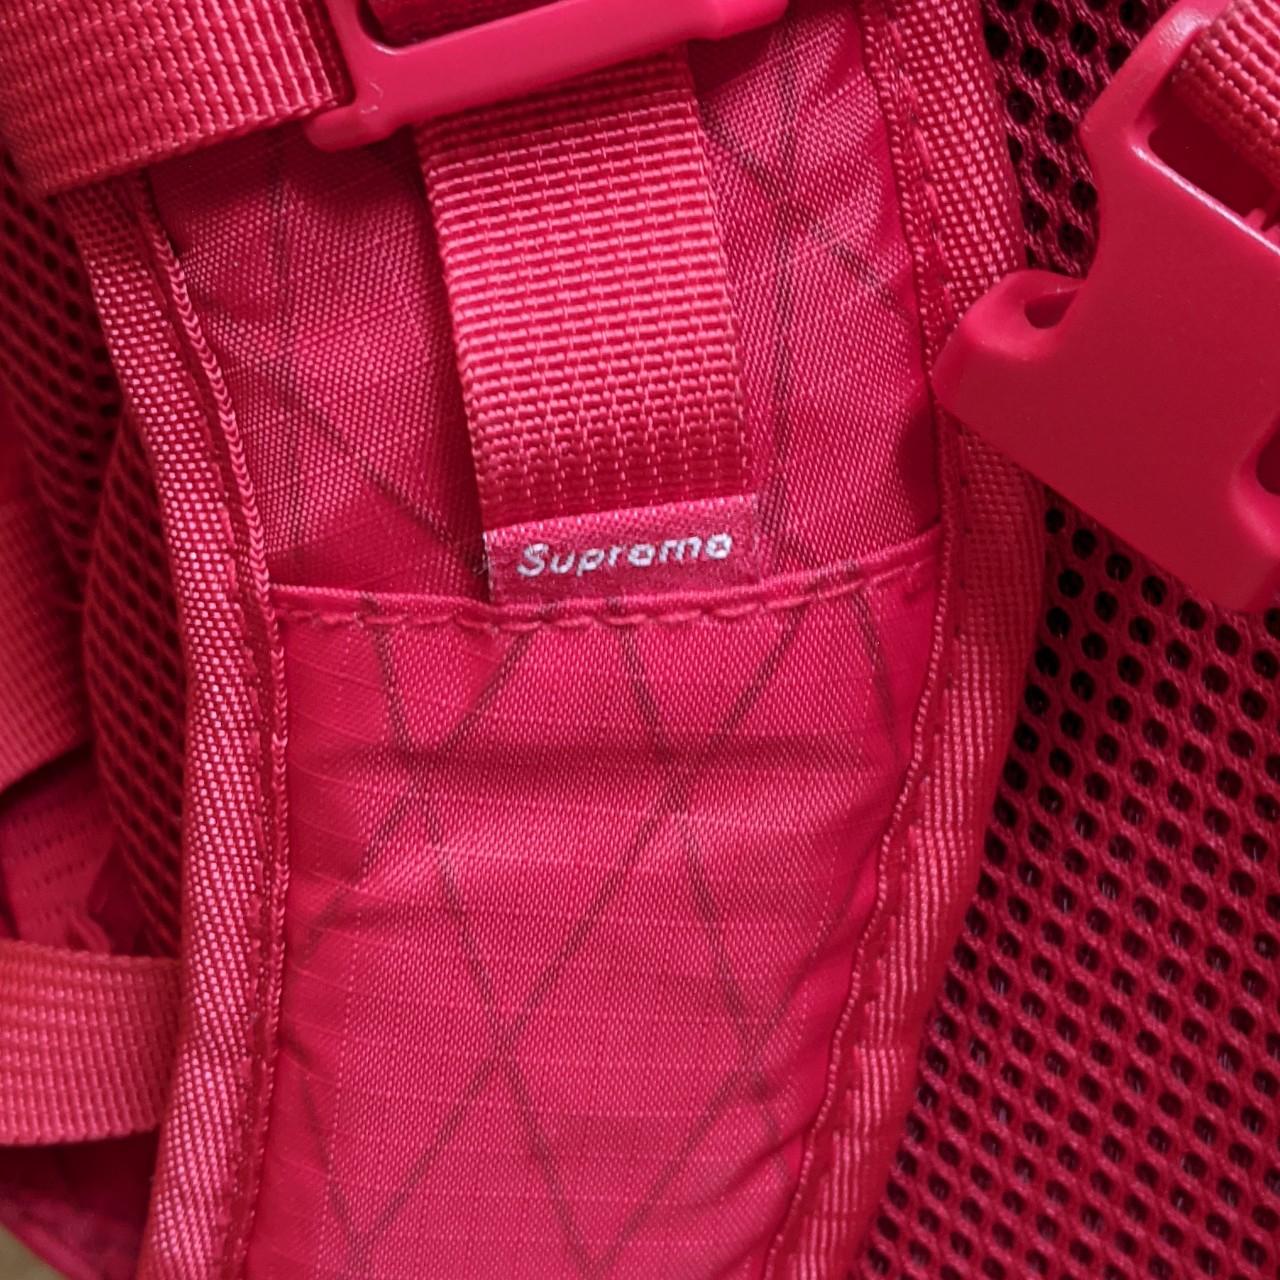 Supreme Backpack (FW18) Red  Supreme backpack, Backpacks, Fresh outfits